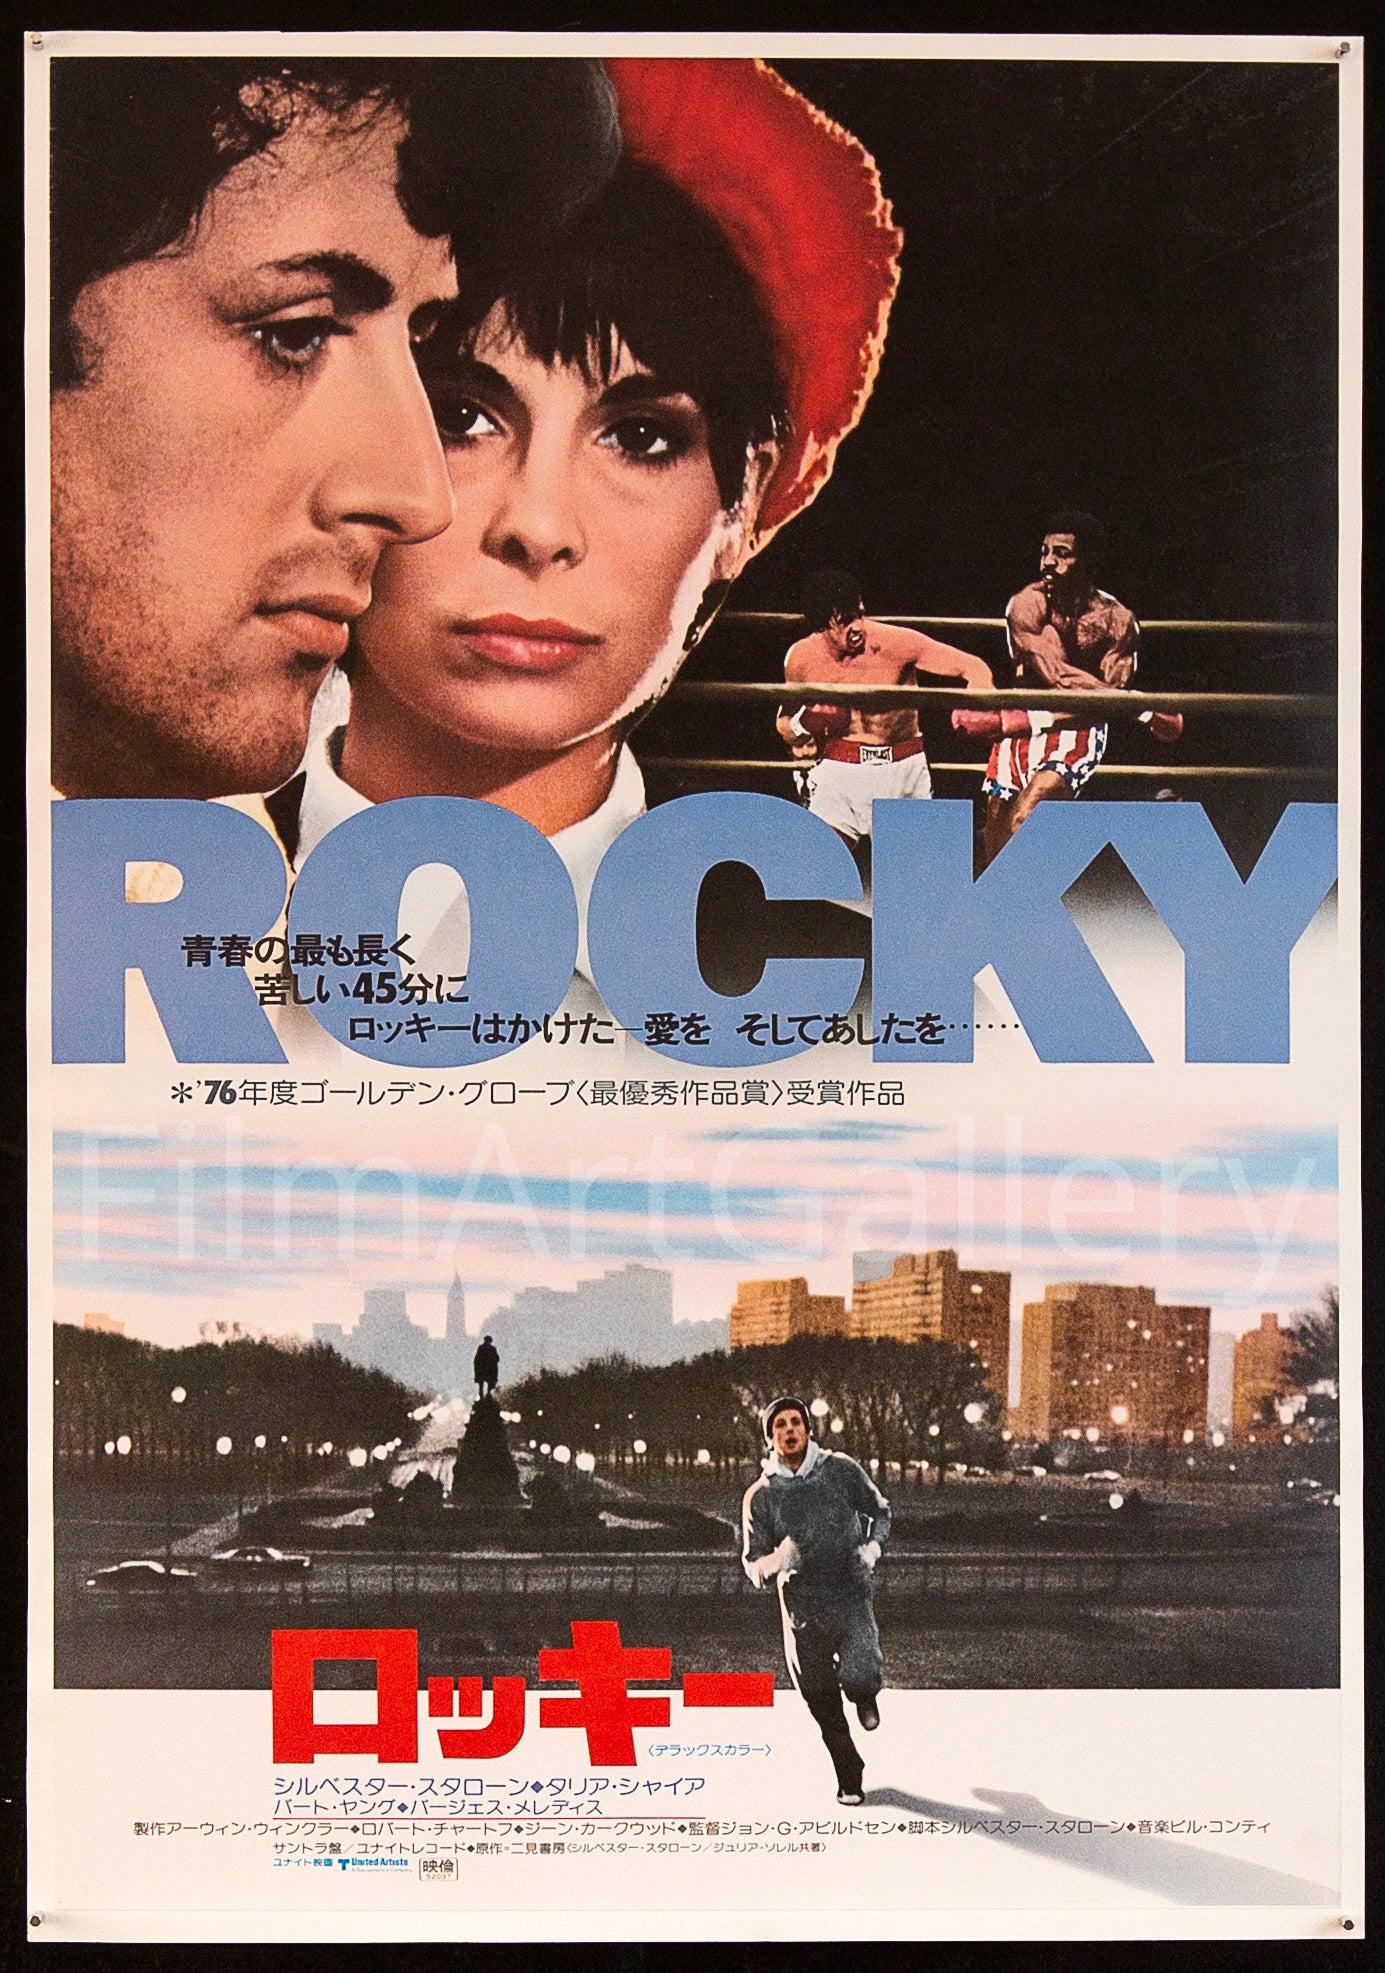 rocky movie poster 1976